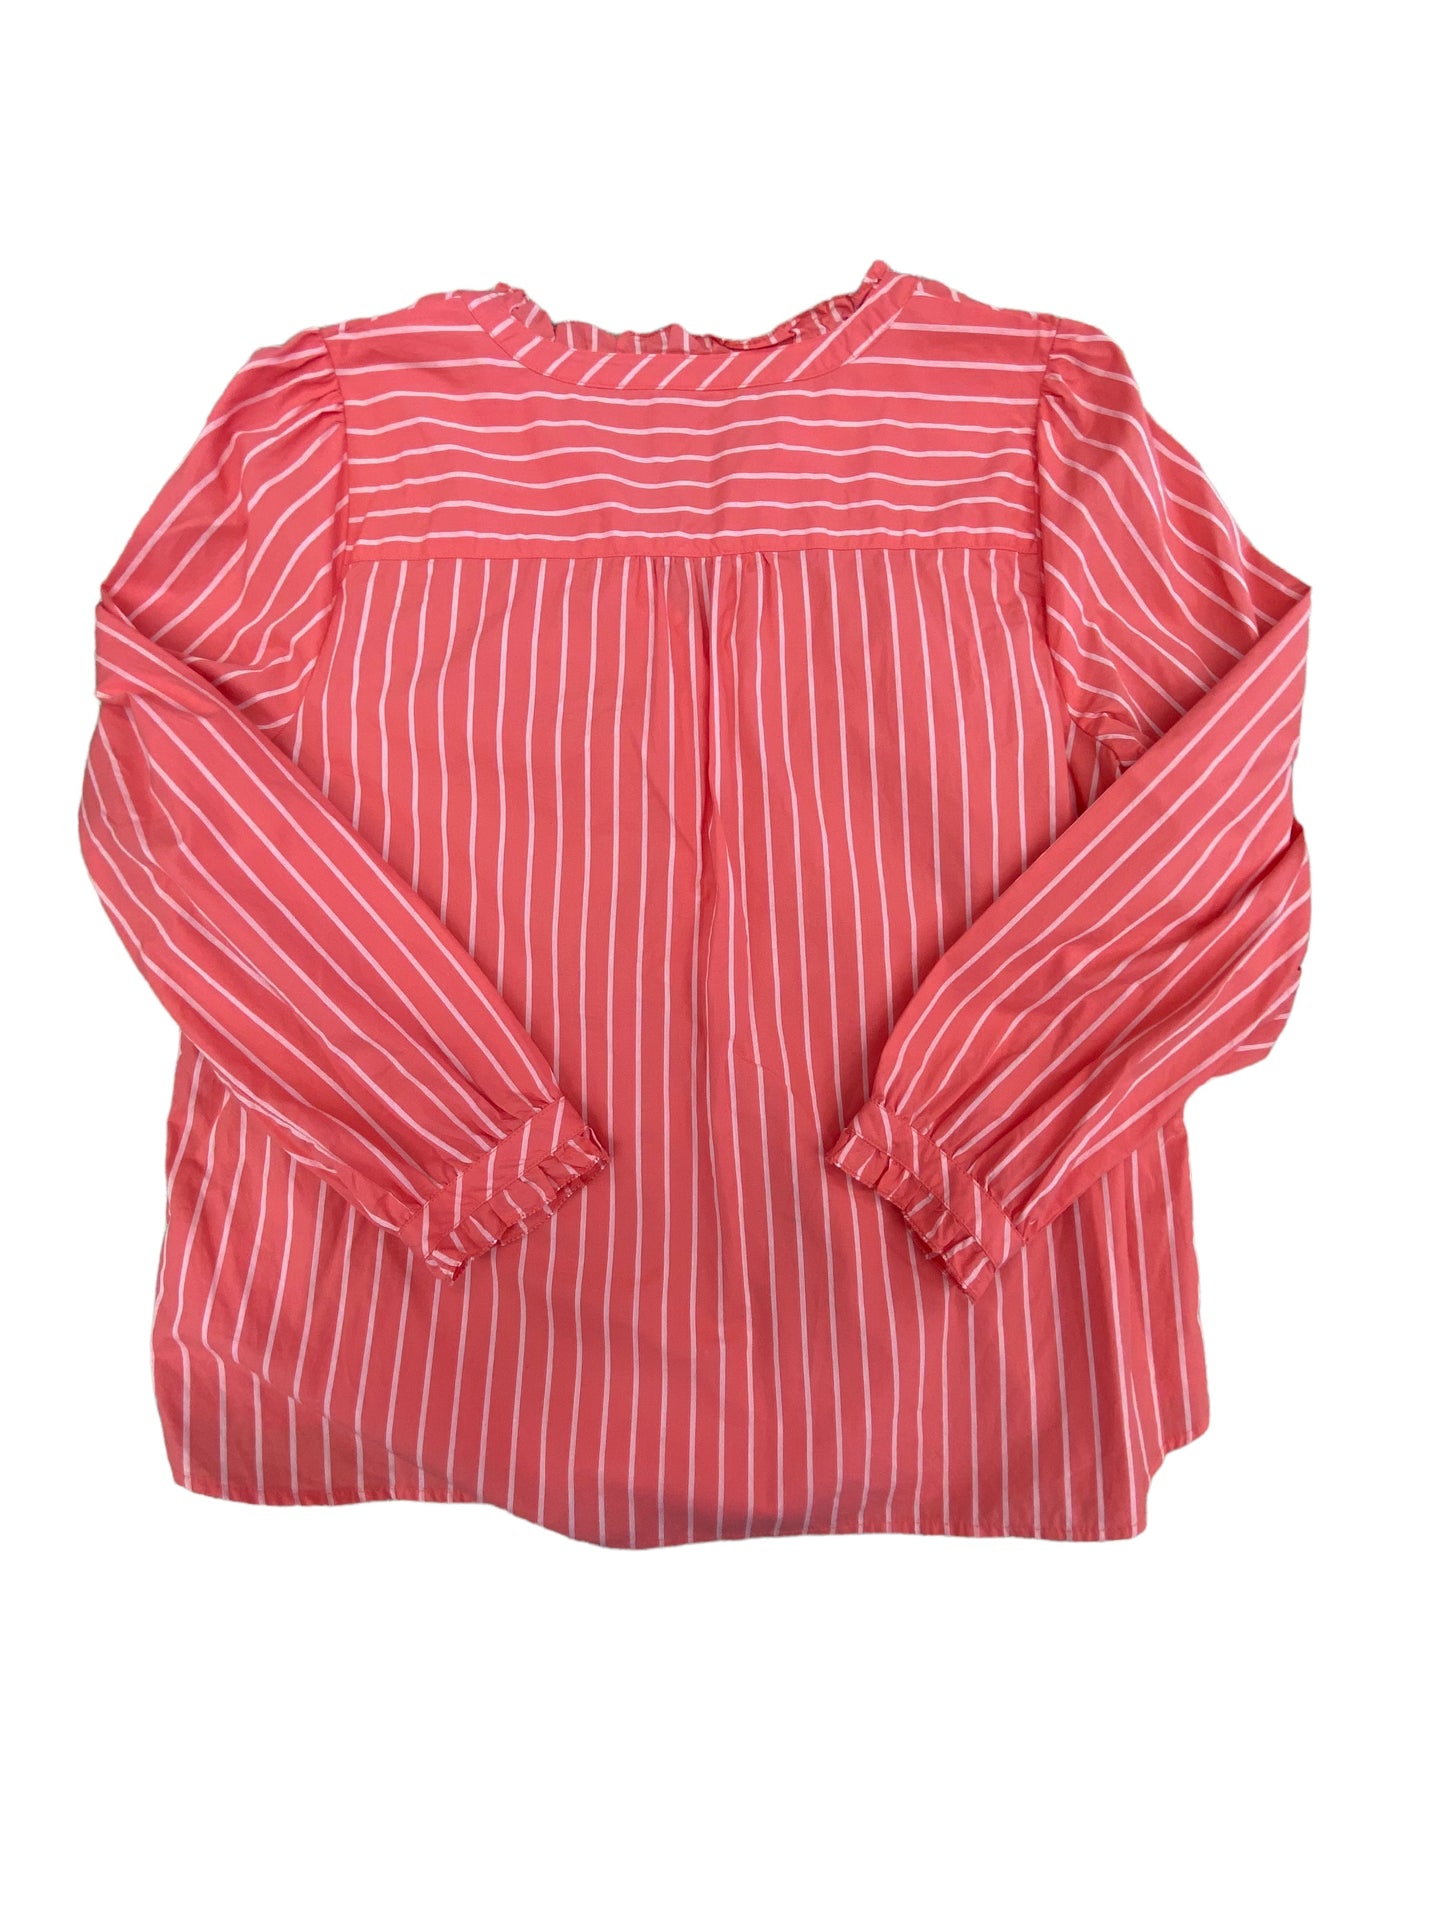 Striped Pattern Top Long Sleeve Talbots, Size Petite   Xl